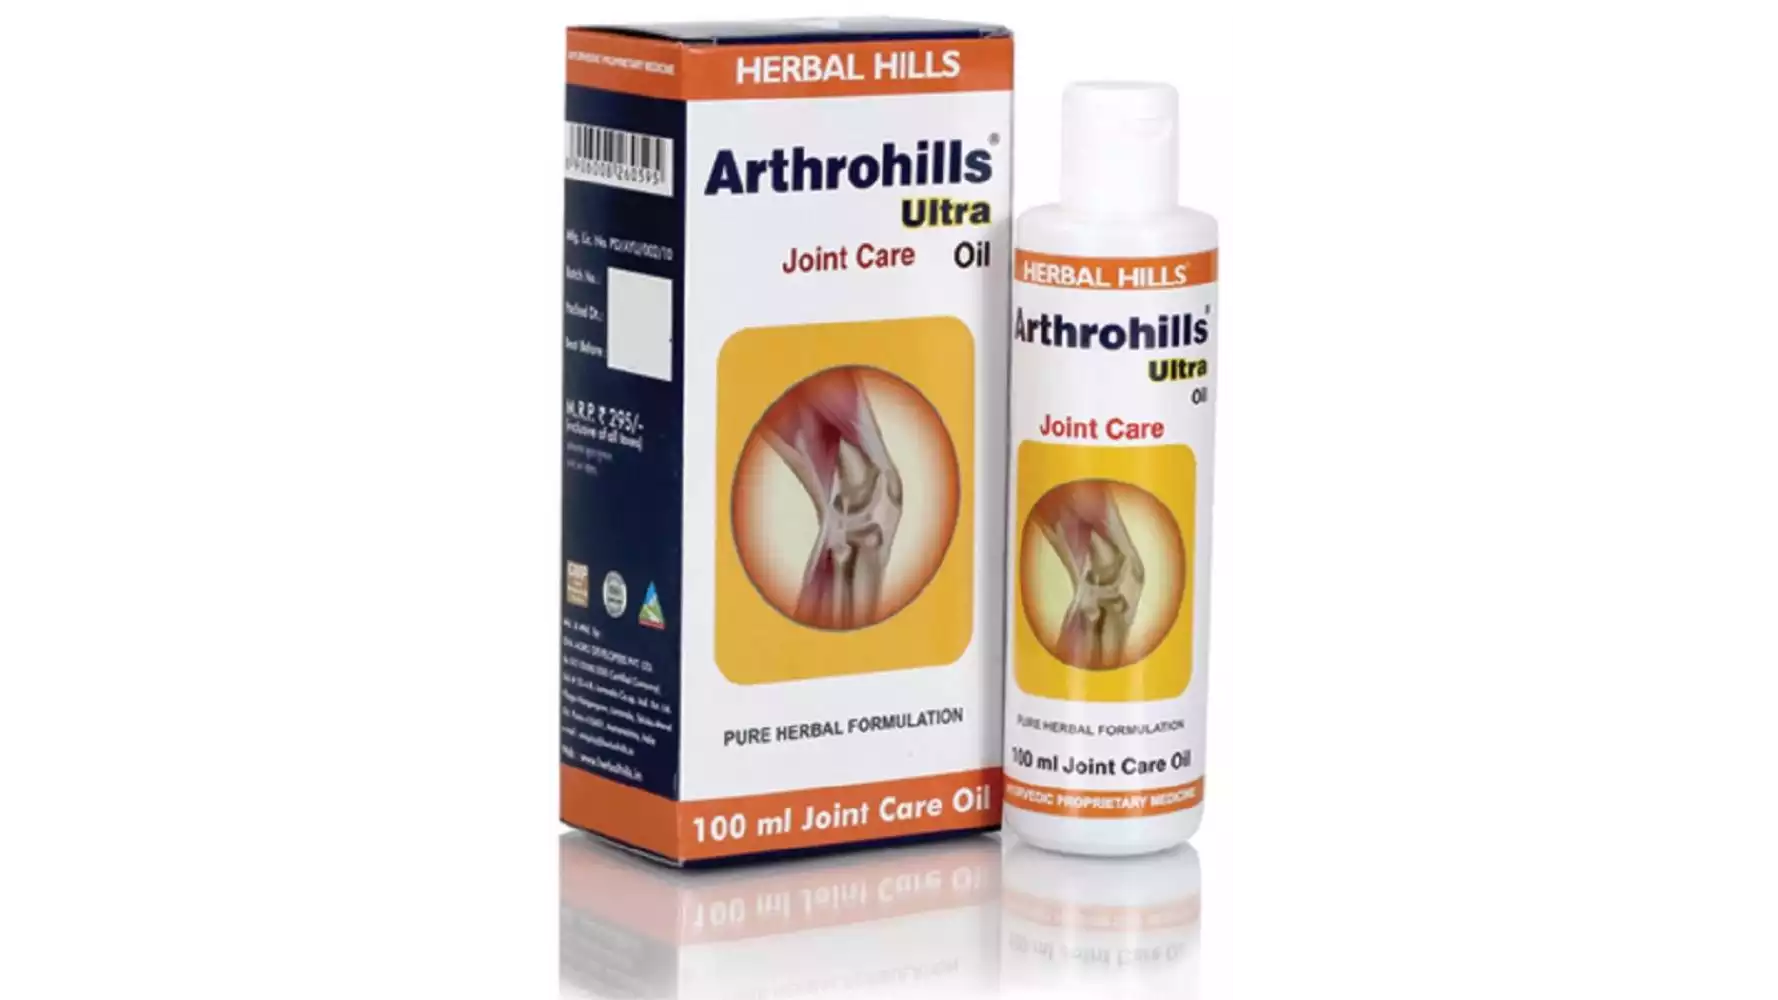 Herbal Hills Arthrohills Ultra Oil (100ml)